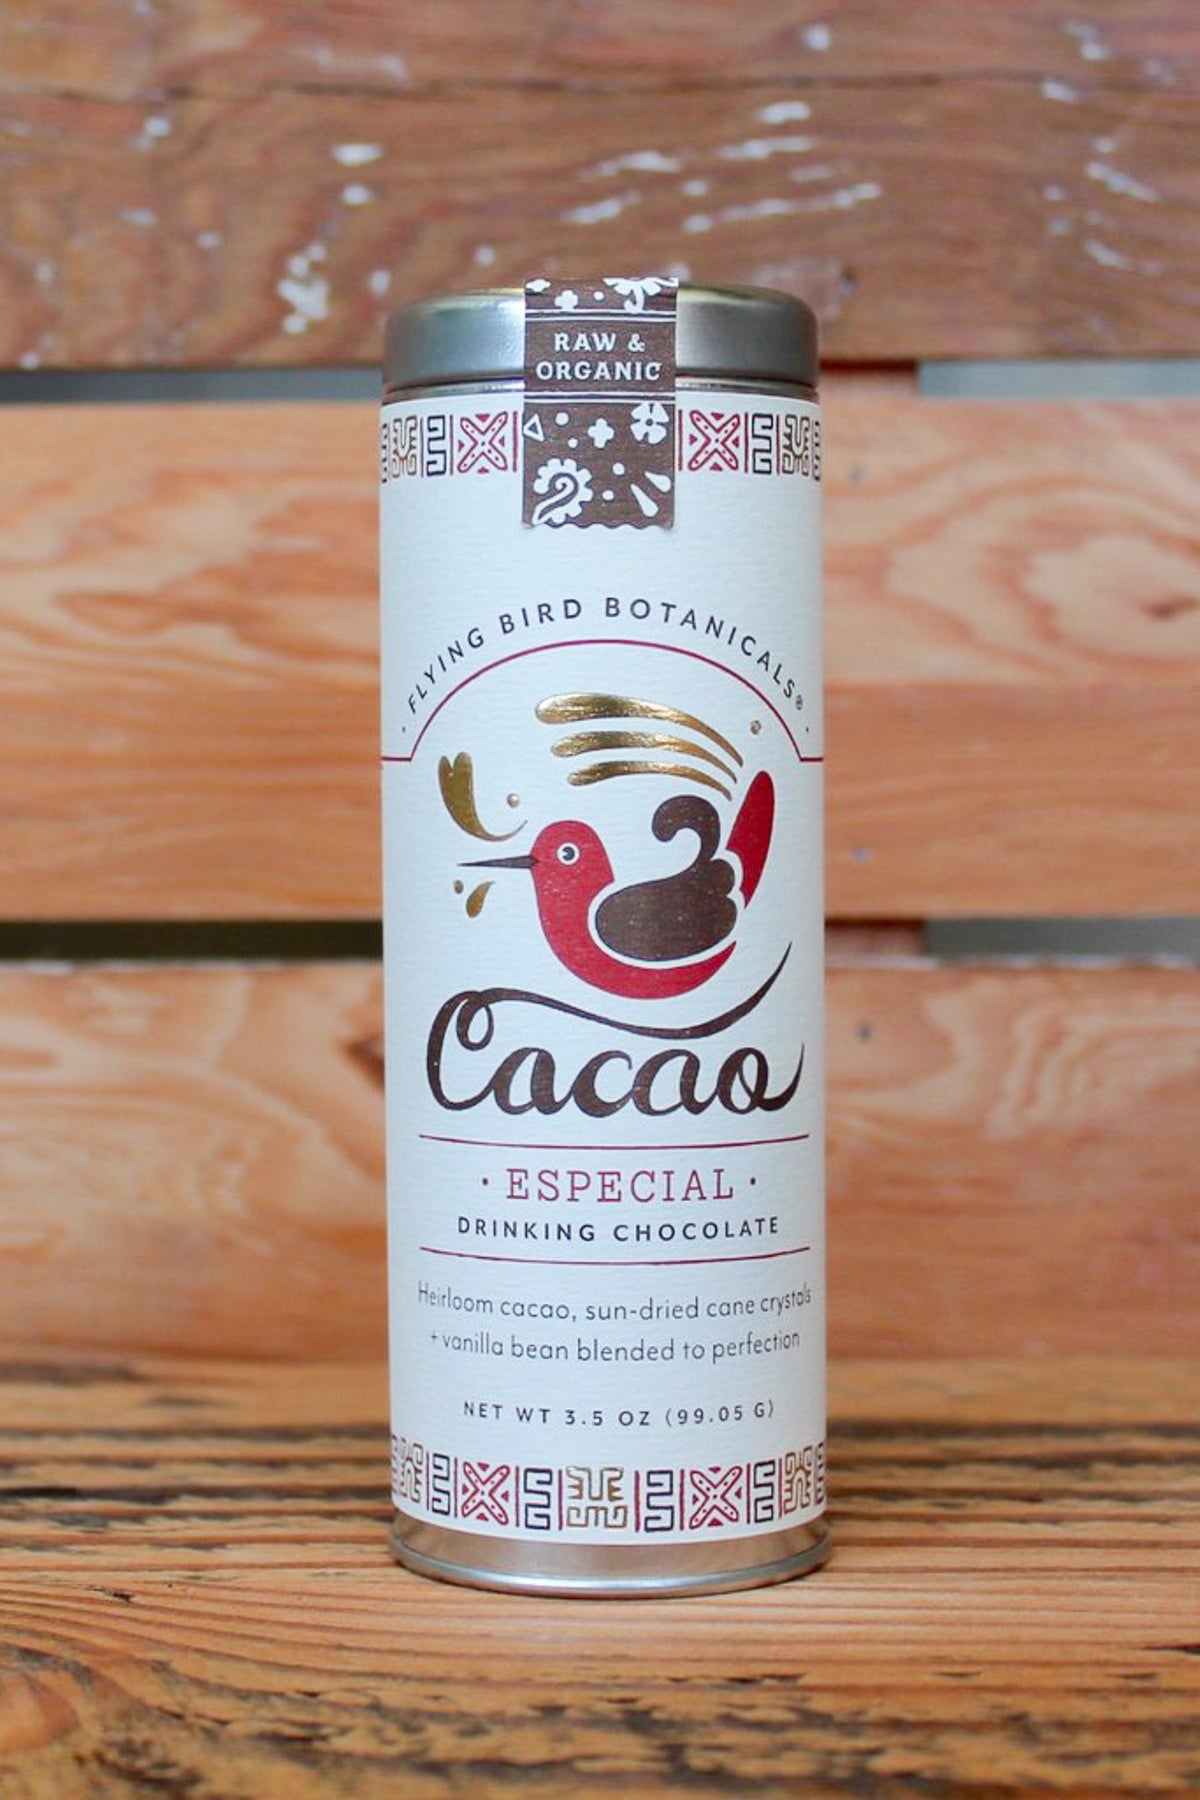 Flying Bird Botanicals Cacao Especial Drinking Chocolate